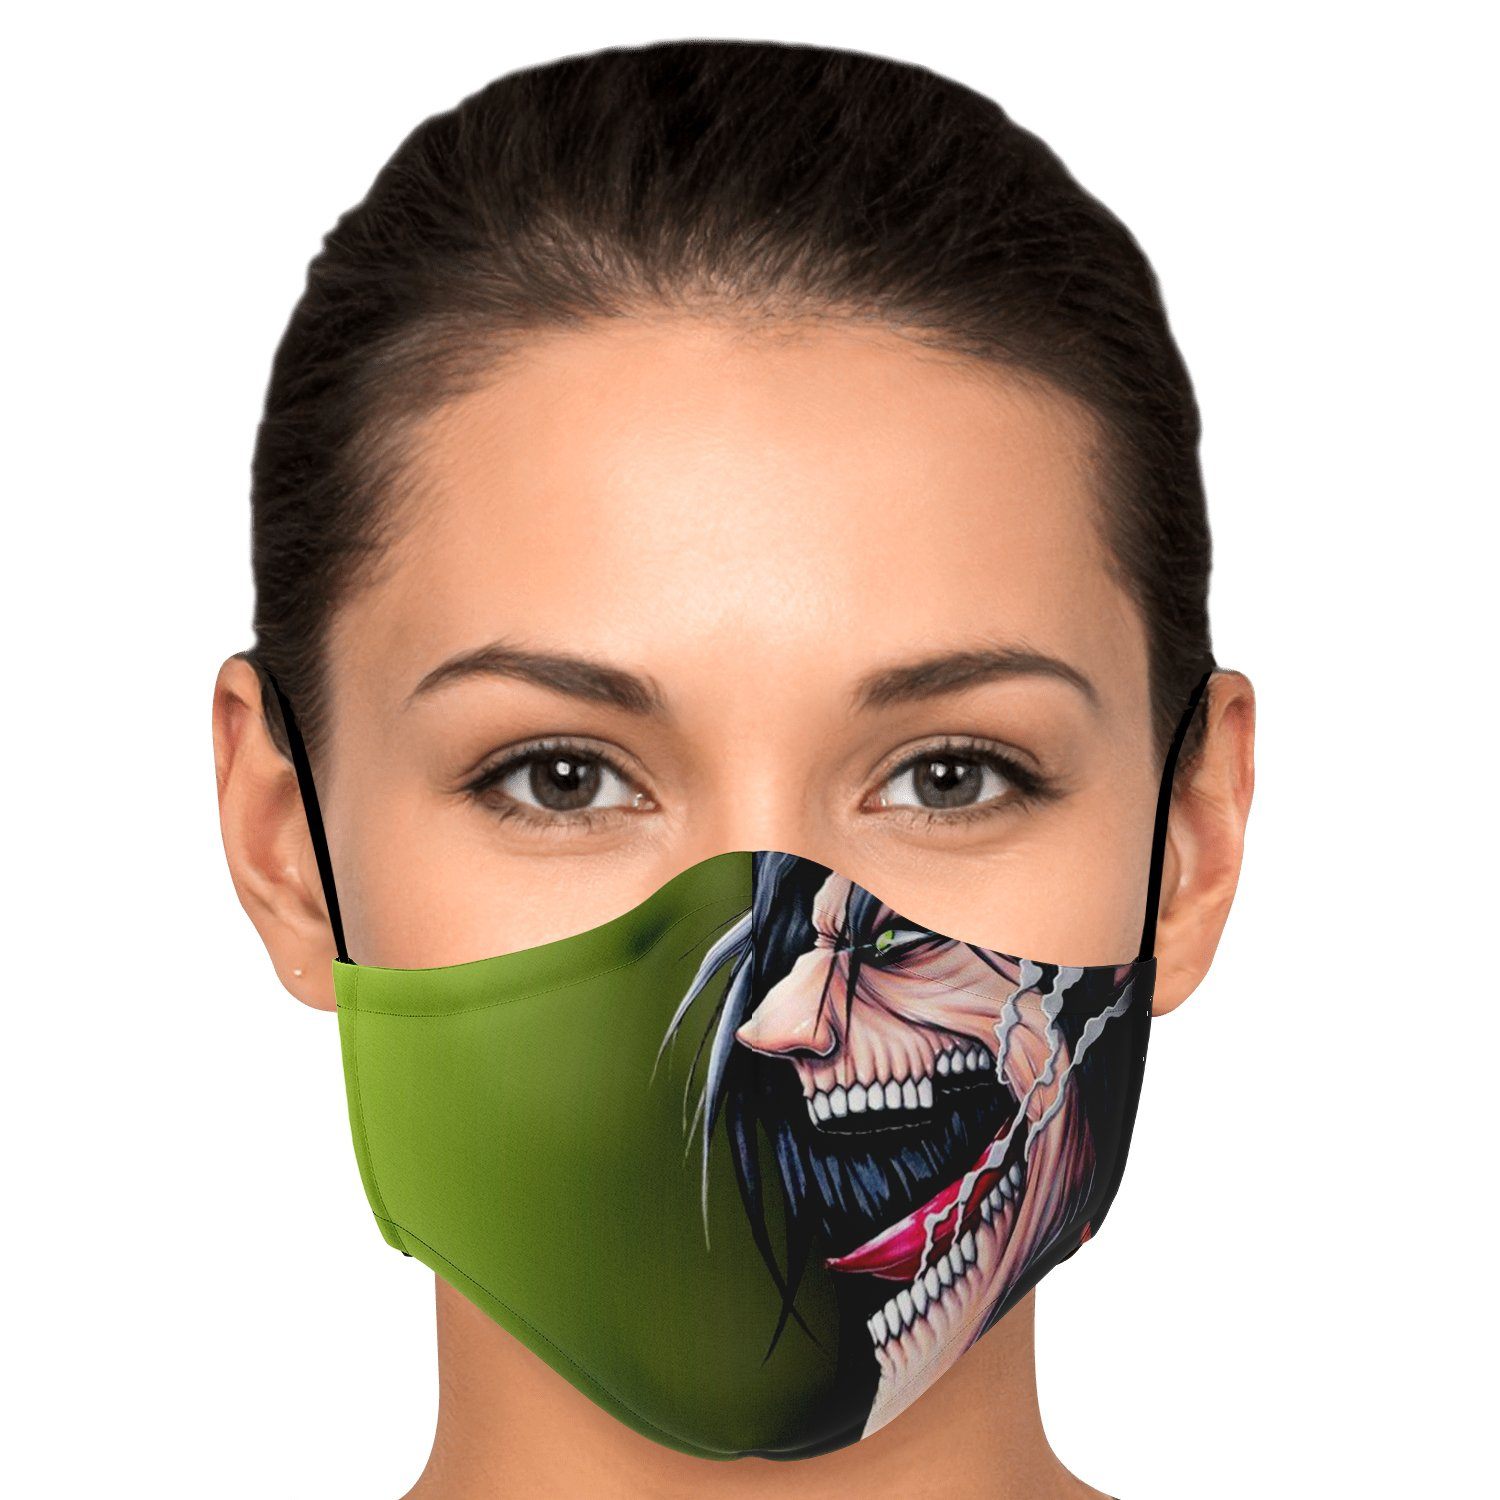 jaw titan v4 attack on titan premium carbon filter face mask 911373 - Attack On Titan Shop